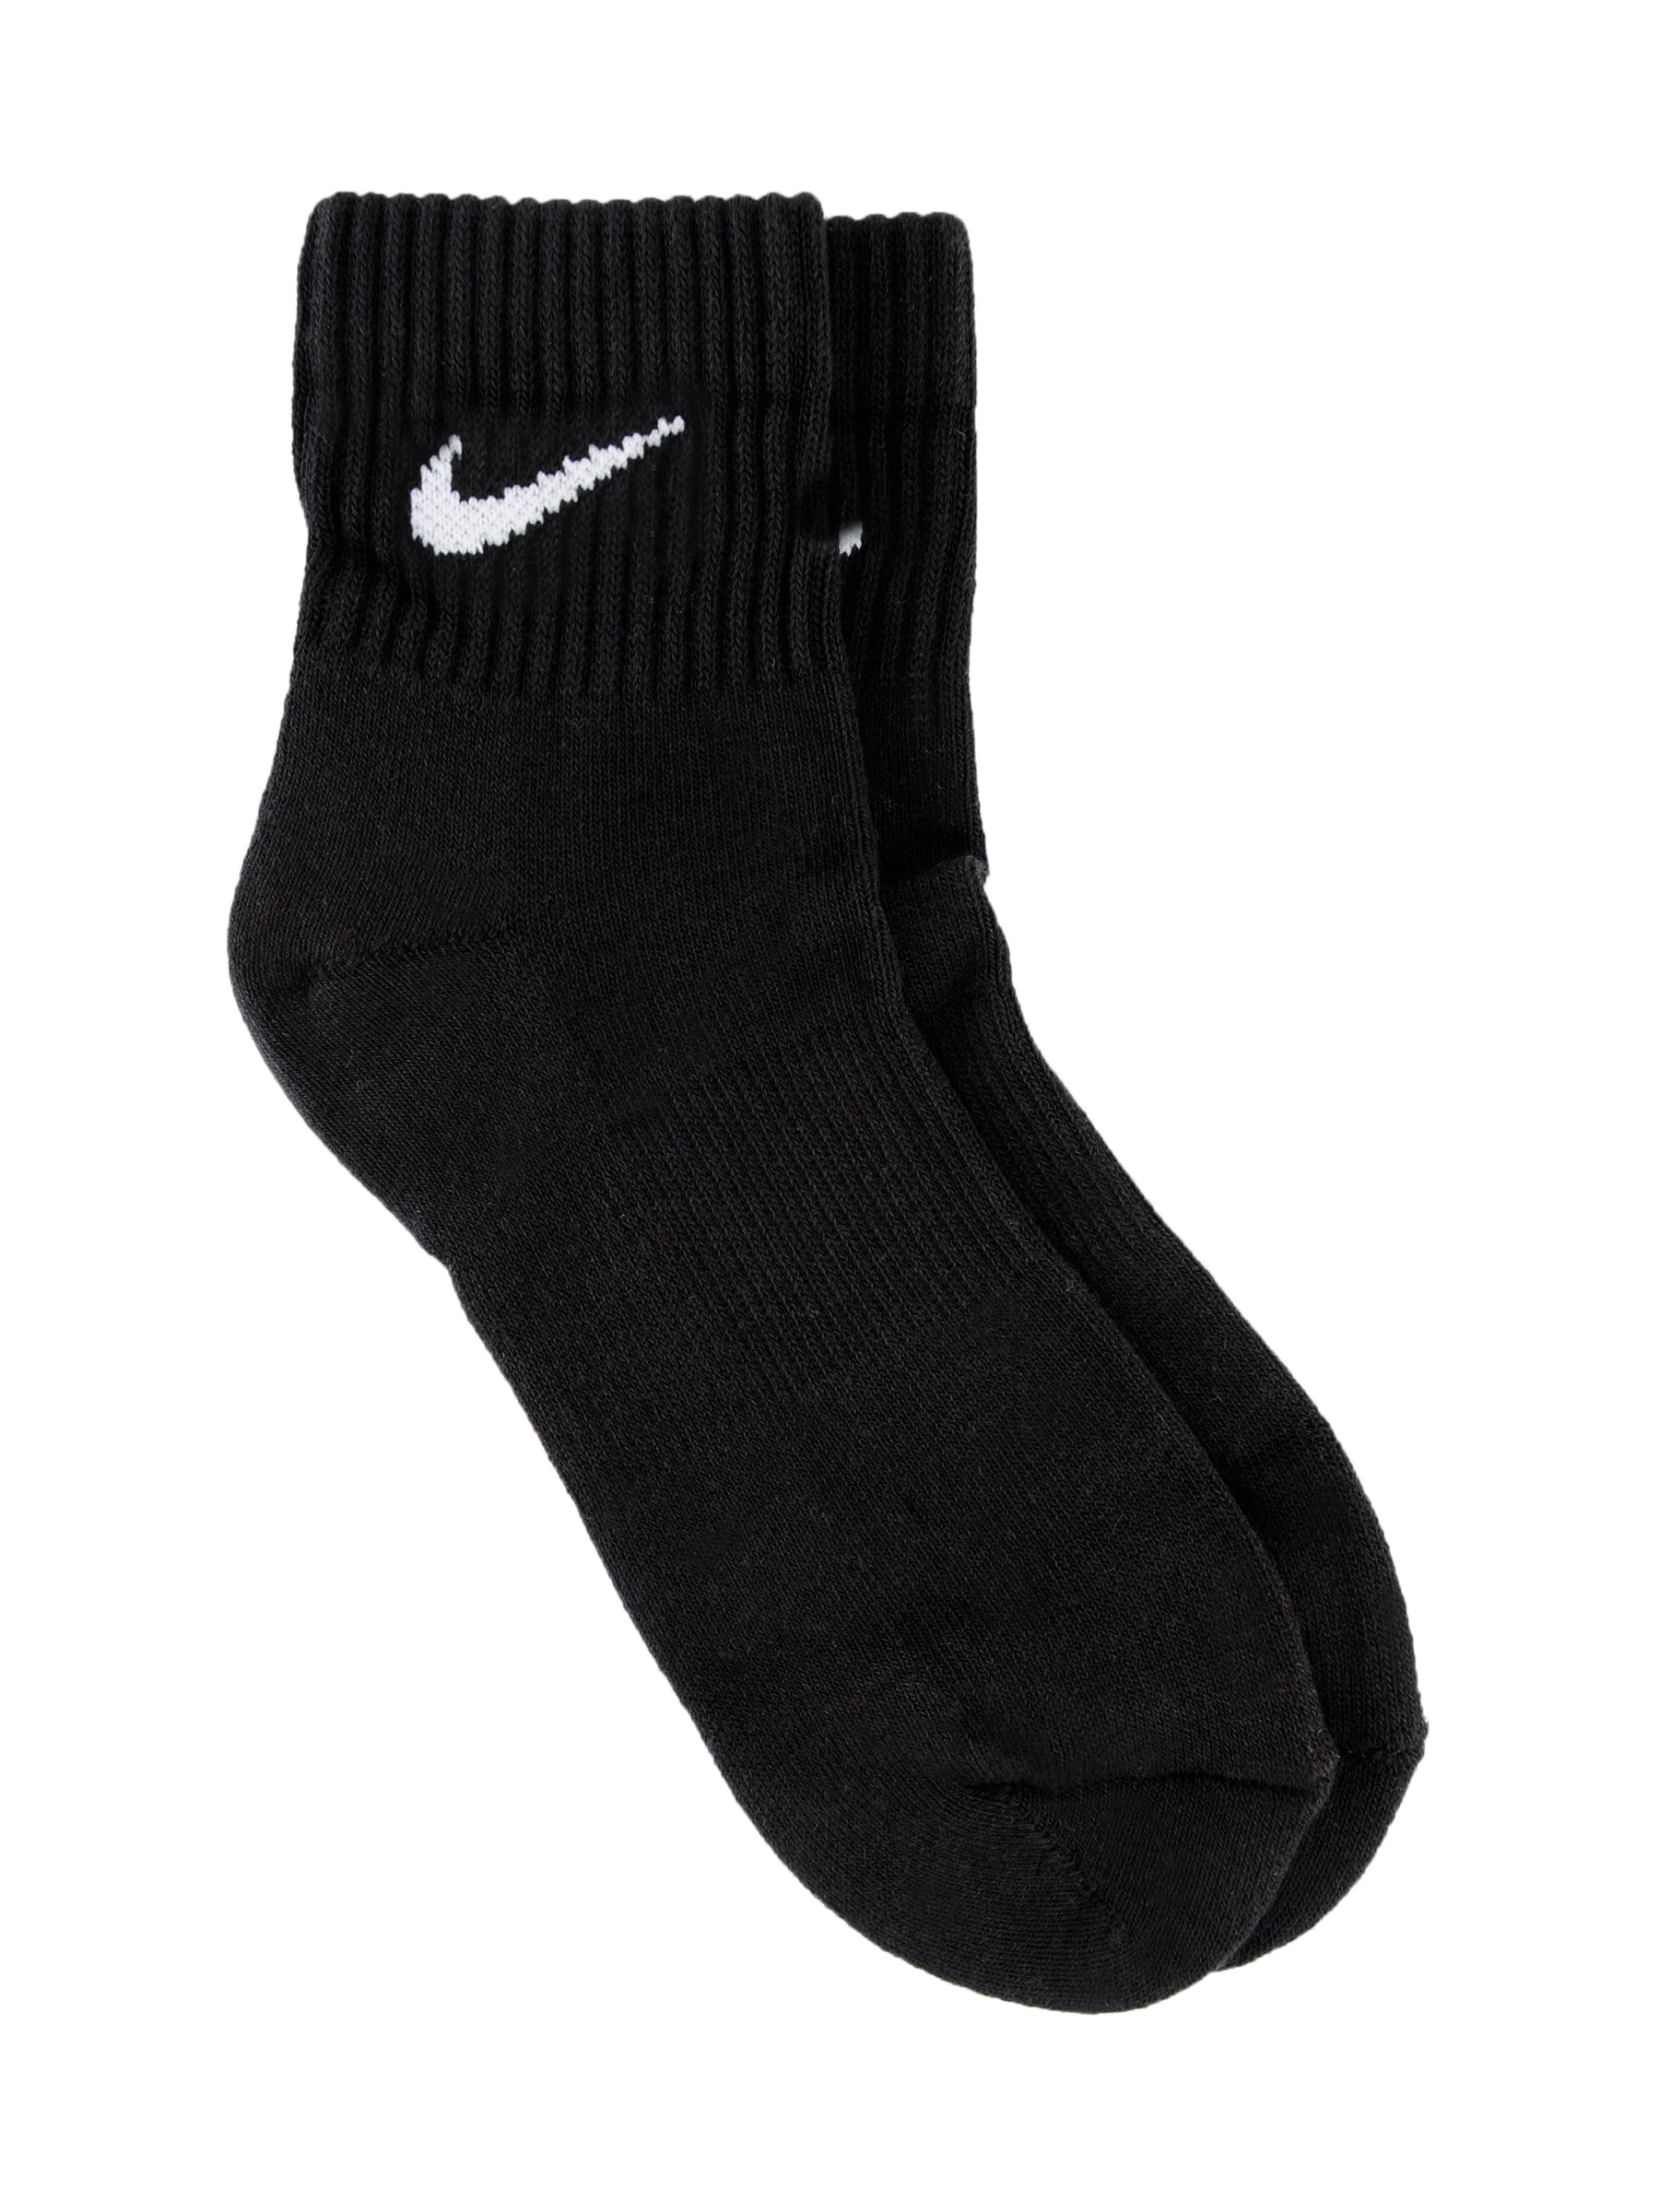 Nike Unisex Sports Black Socks